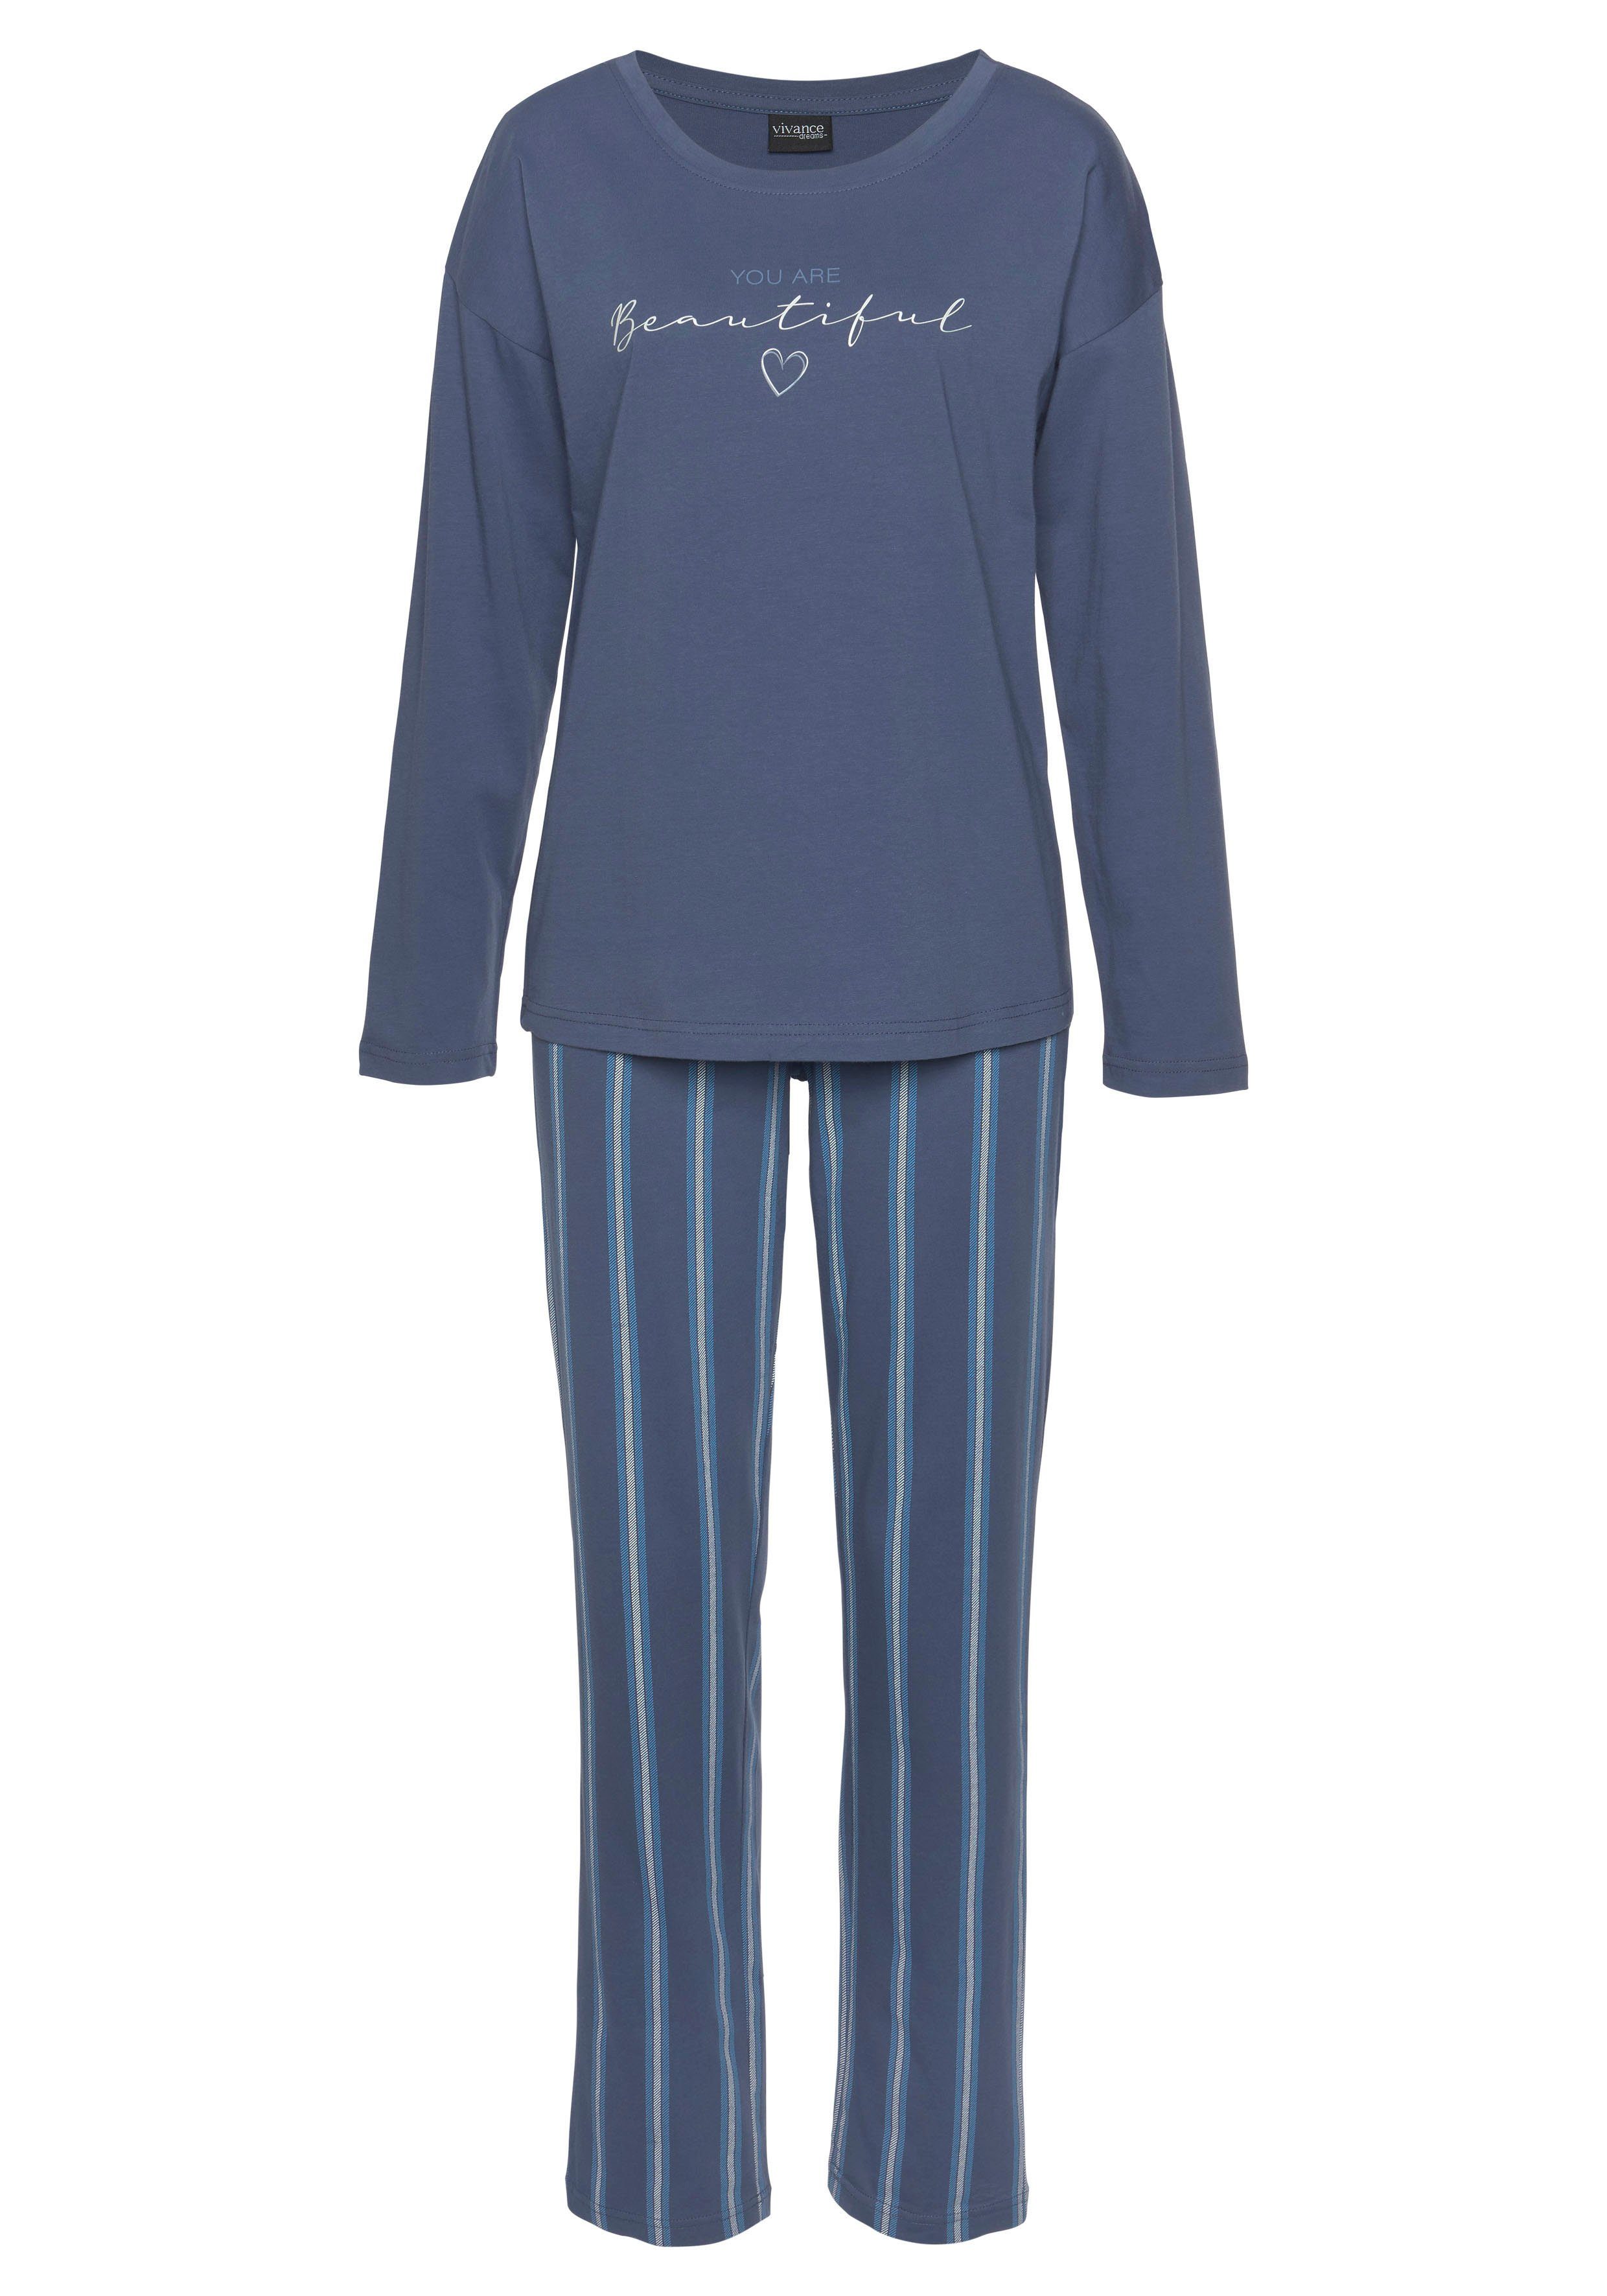 Vivance Dreams Pyjama Frontdruck mit (2 Stück) blau-gestreift 1 tlg